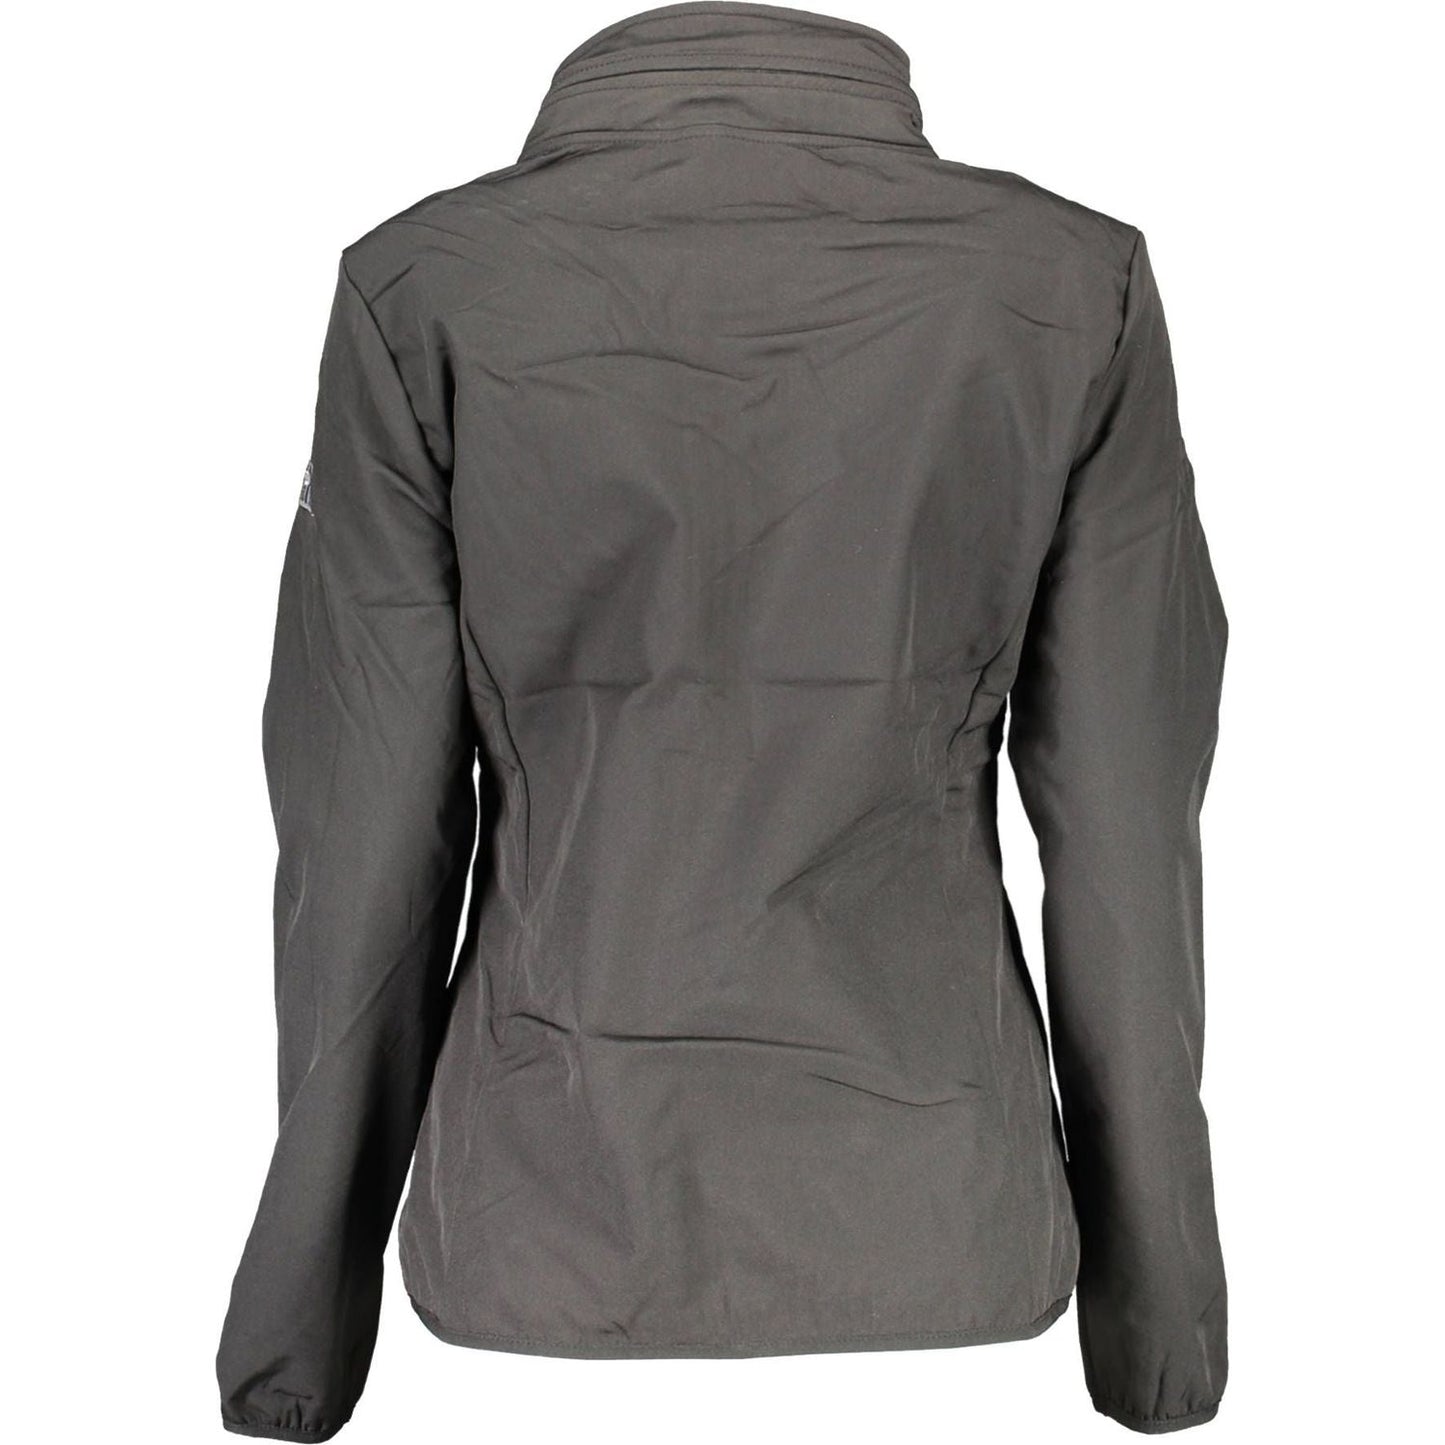 Norway 1963 Sleek Black Sports Jacket with Removable Hood sleek-black-sports-jacket-with-removable-hood